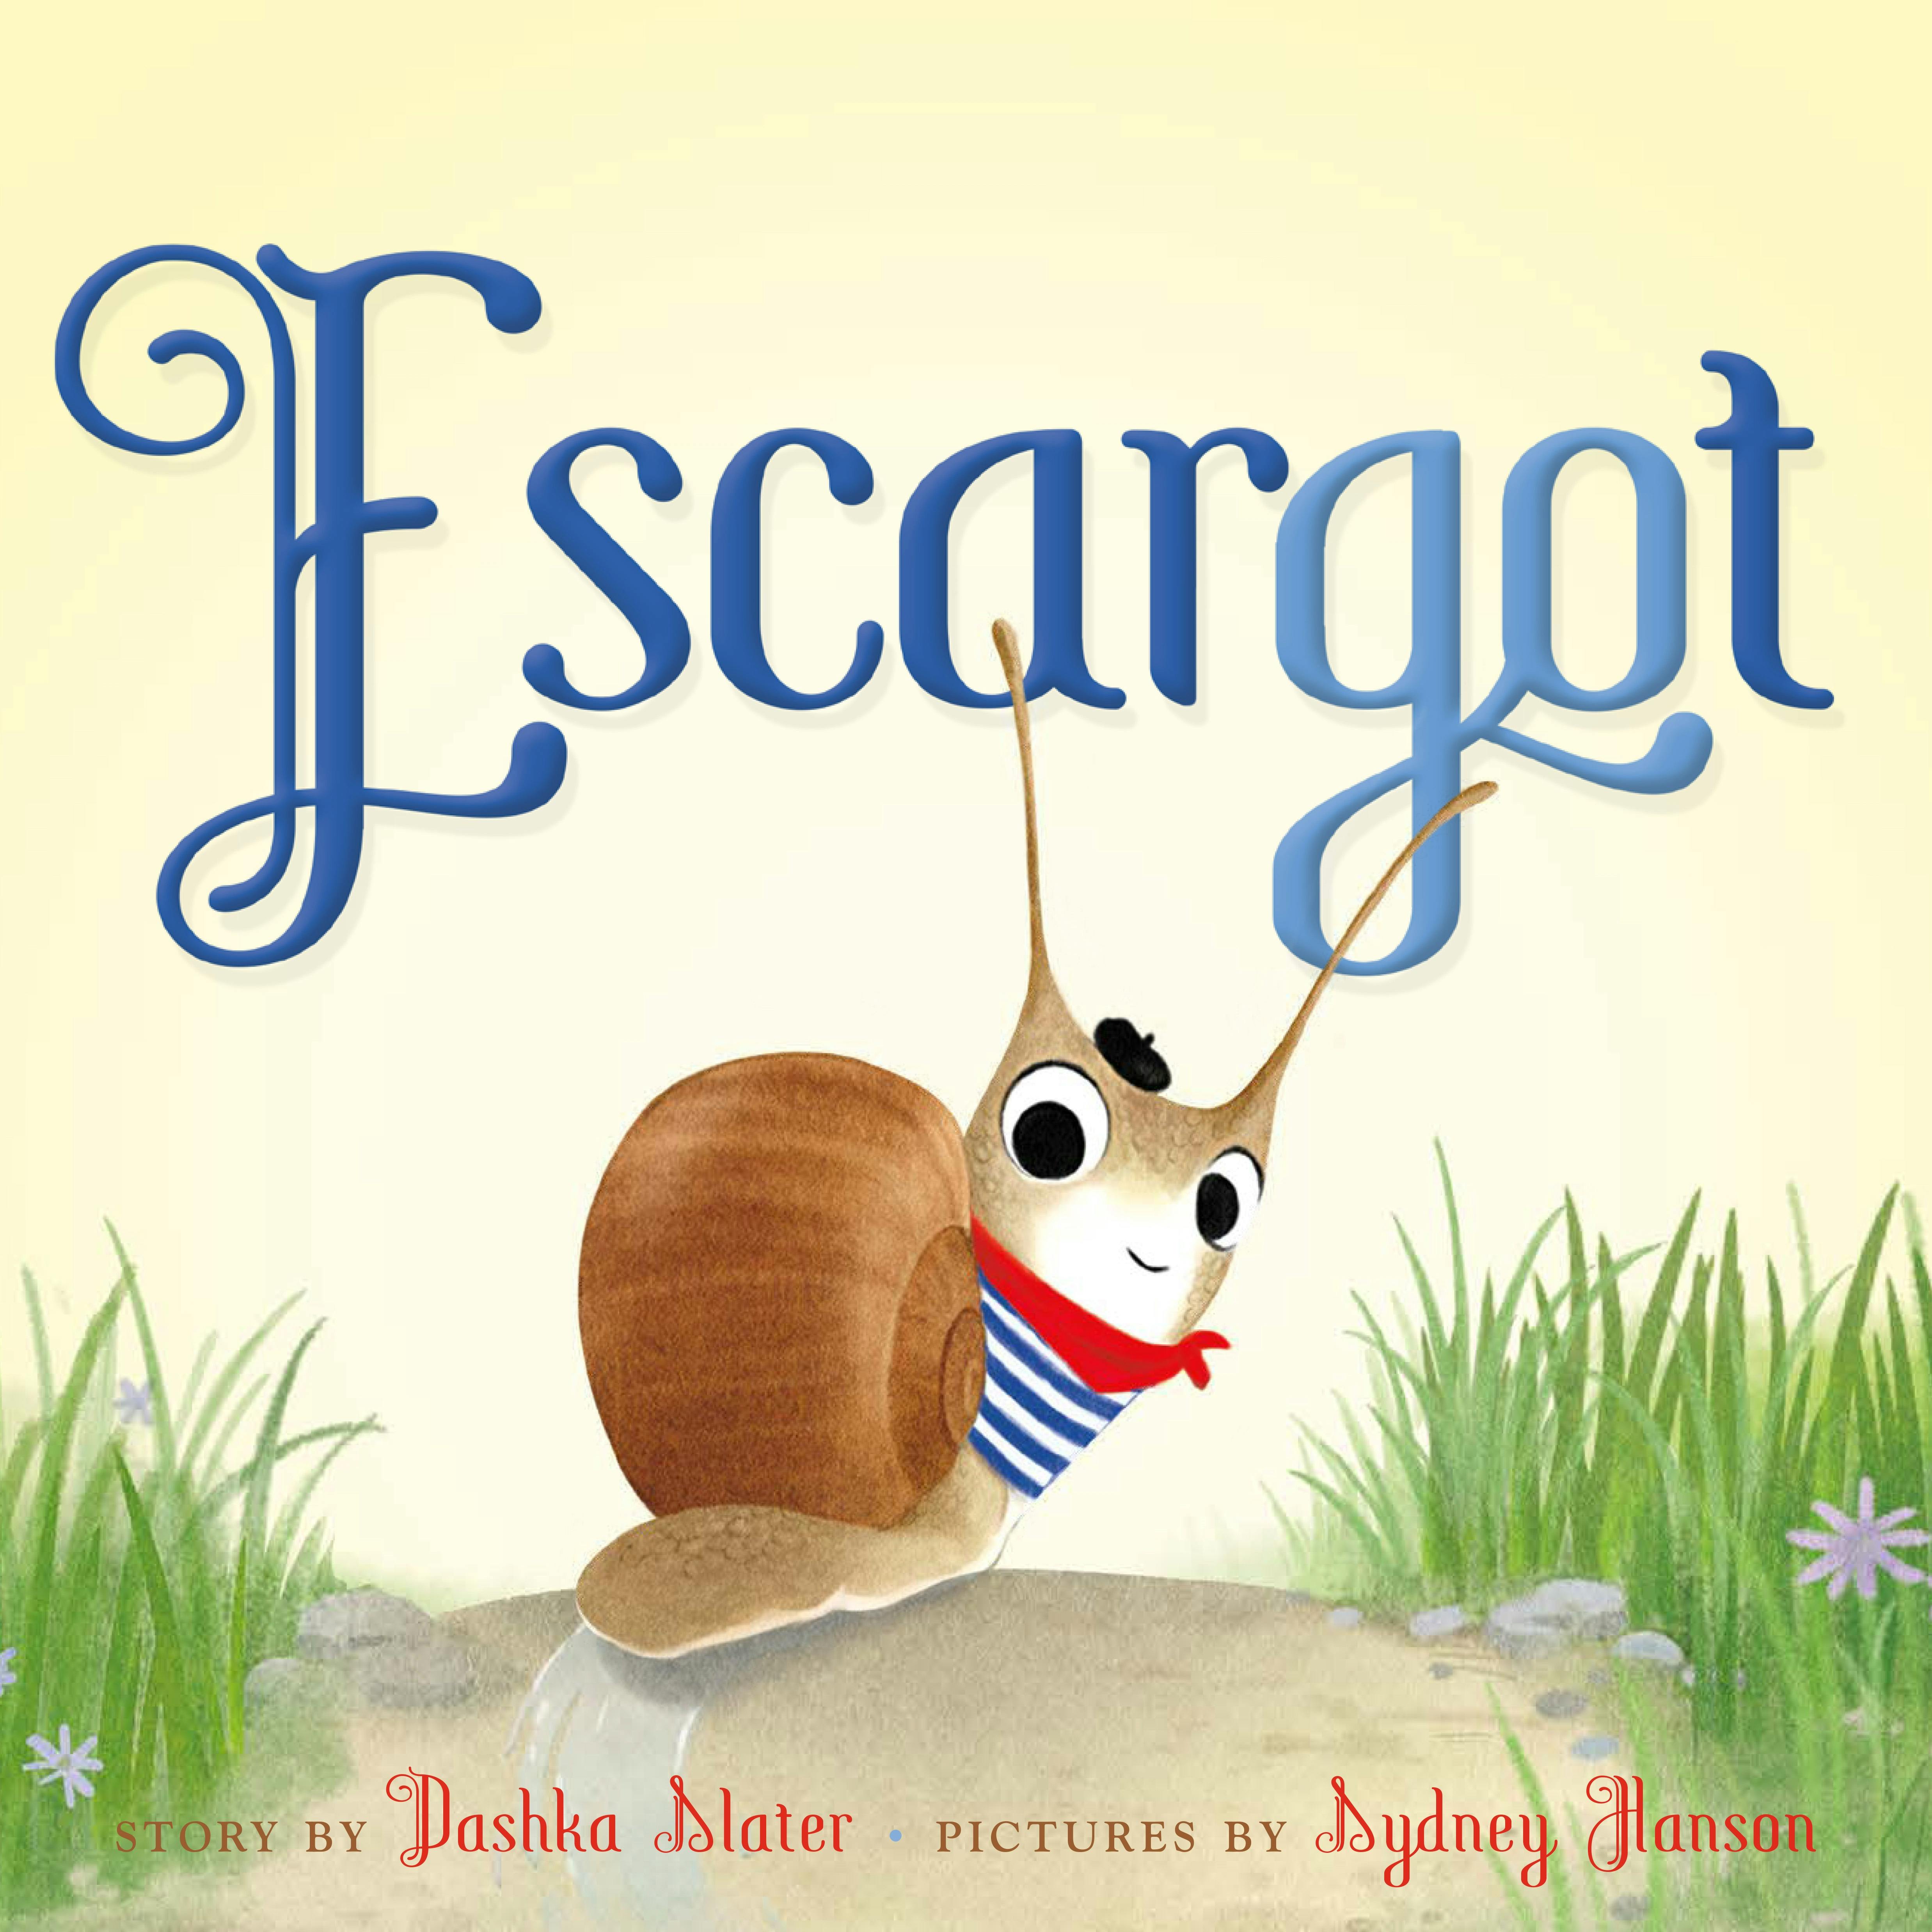 Image of Escargot